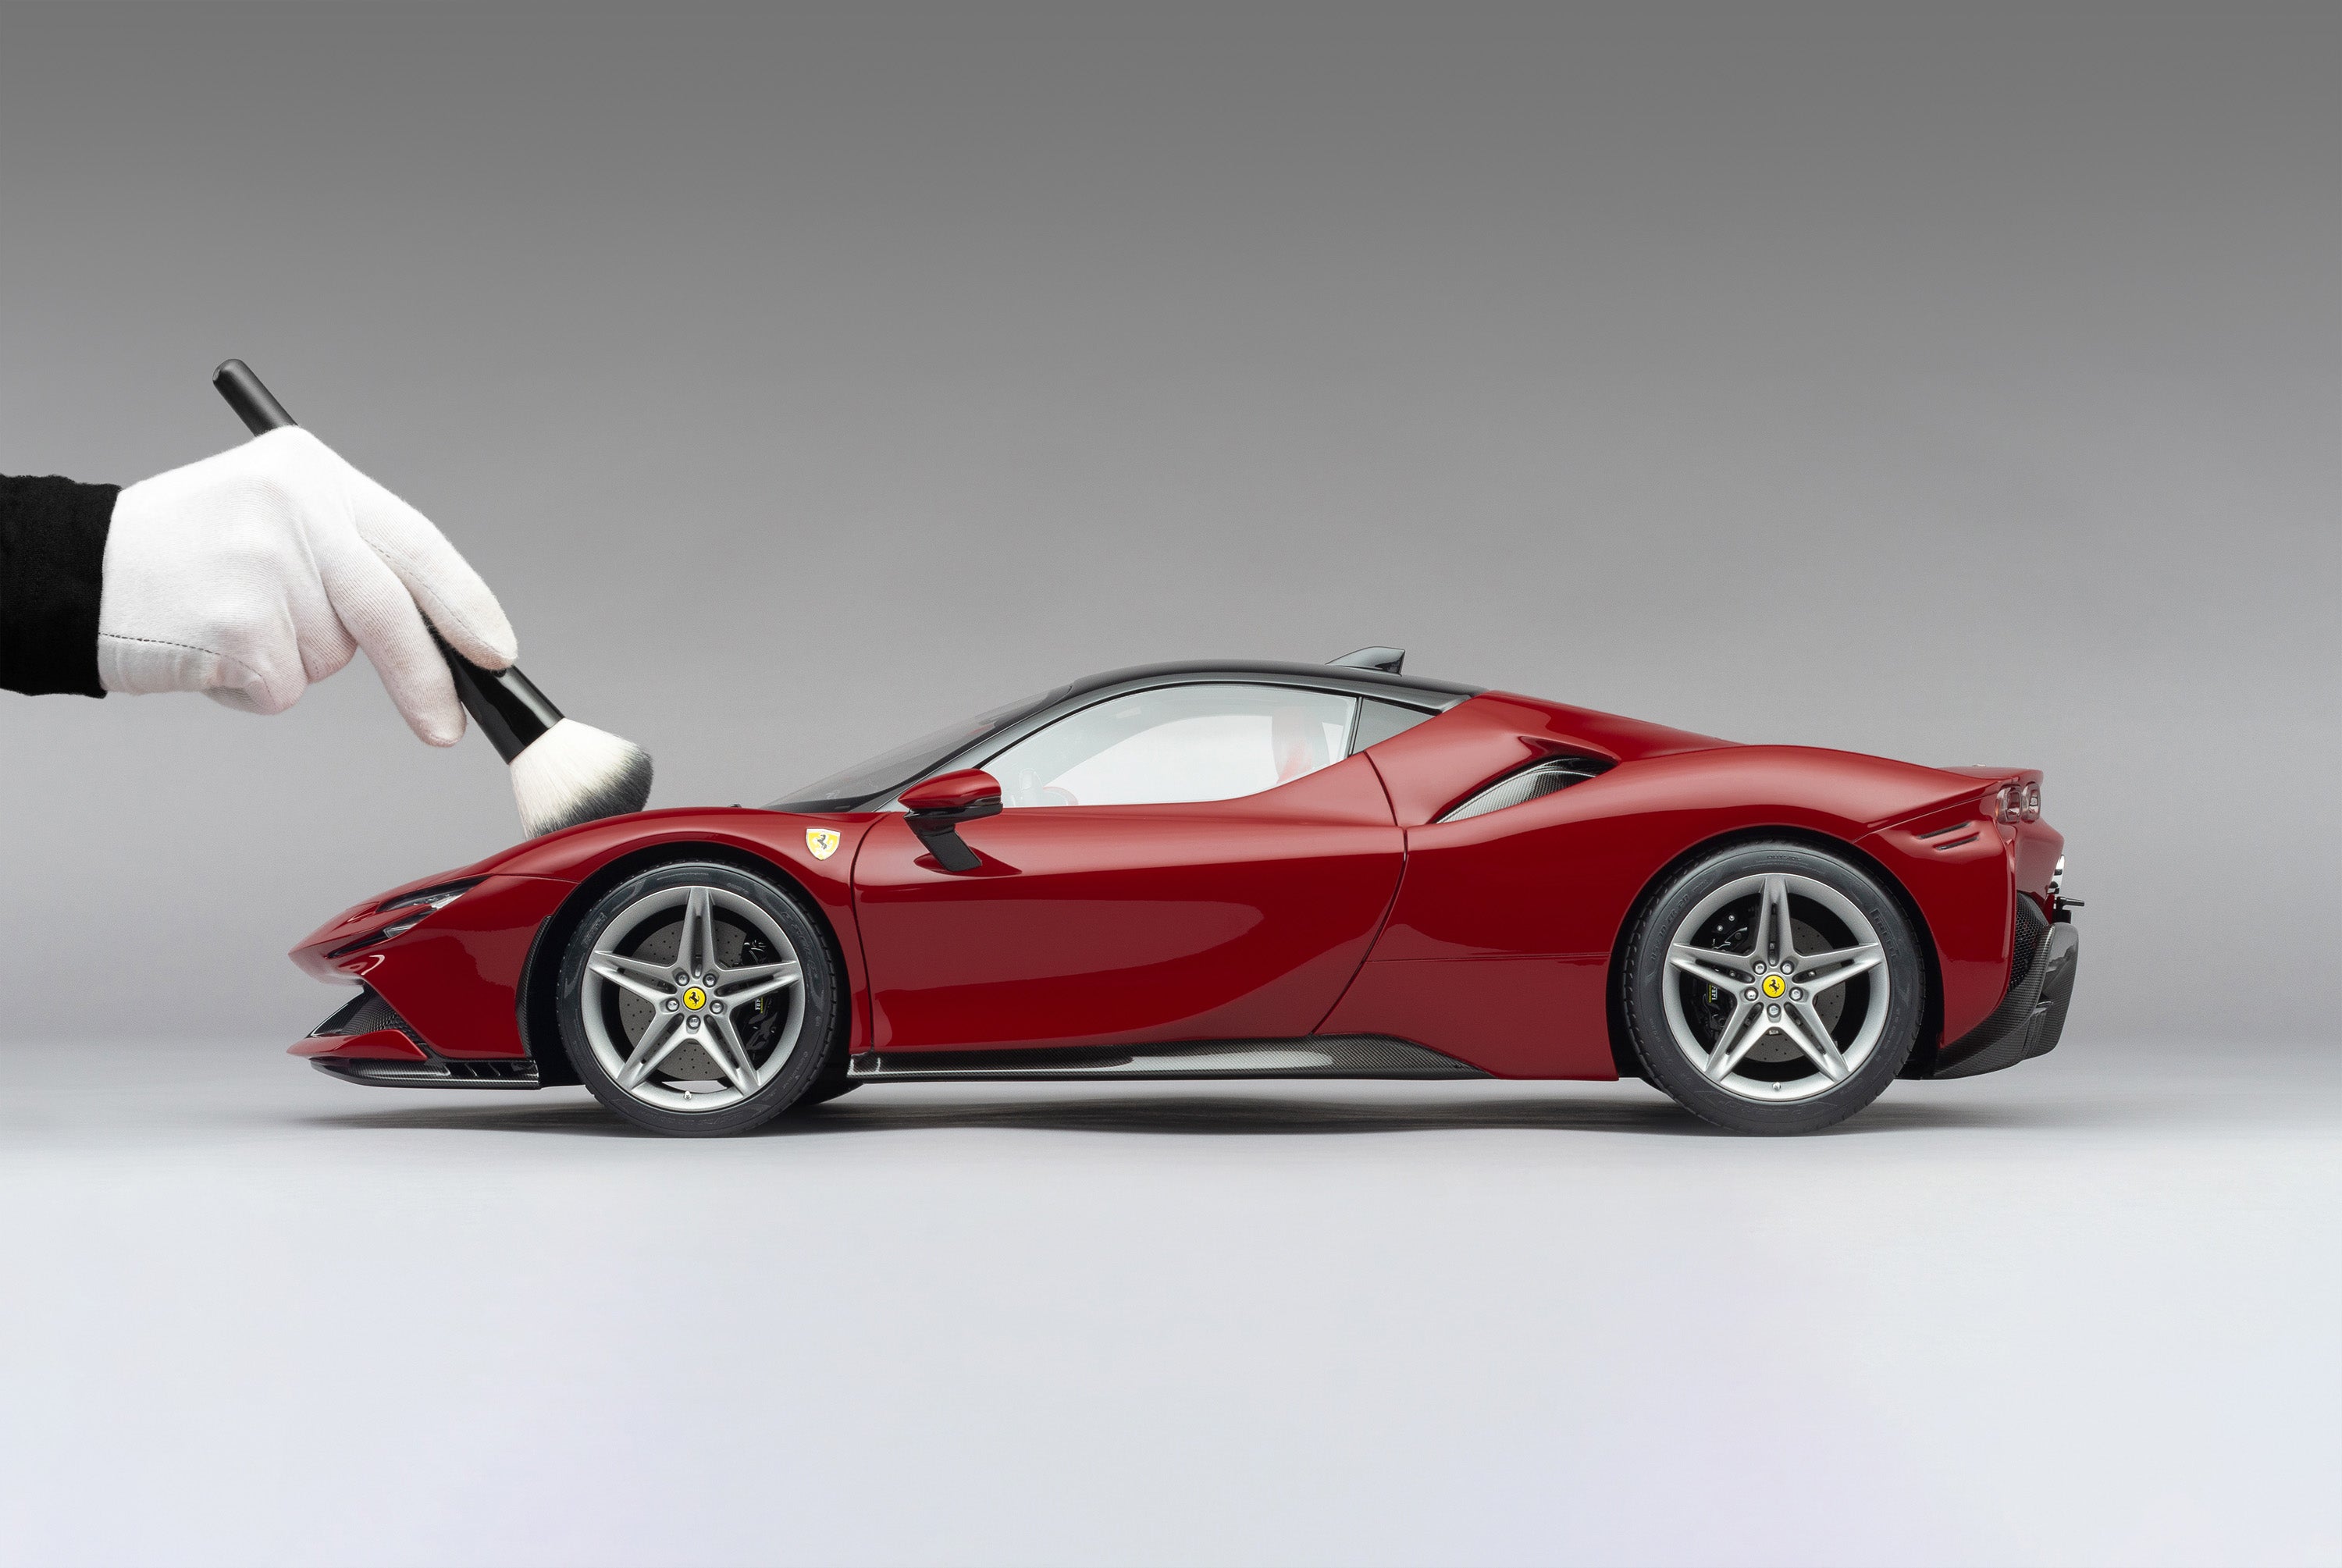 Scuderia Ferrari's Hybrid Era: Keeping Up The Fight